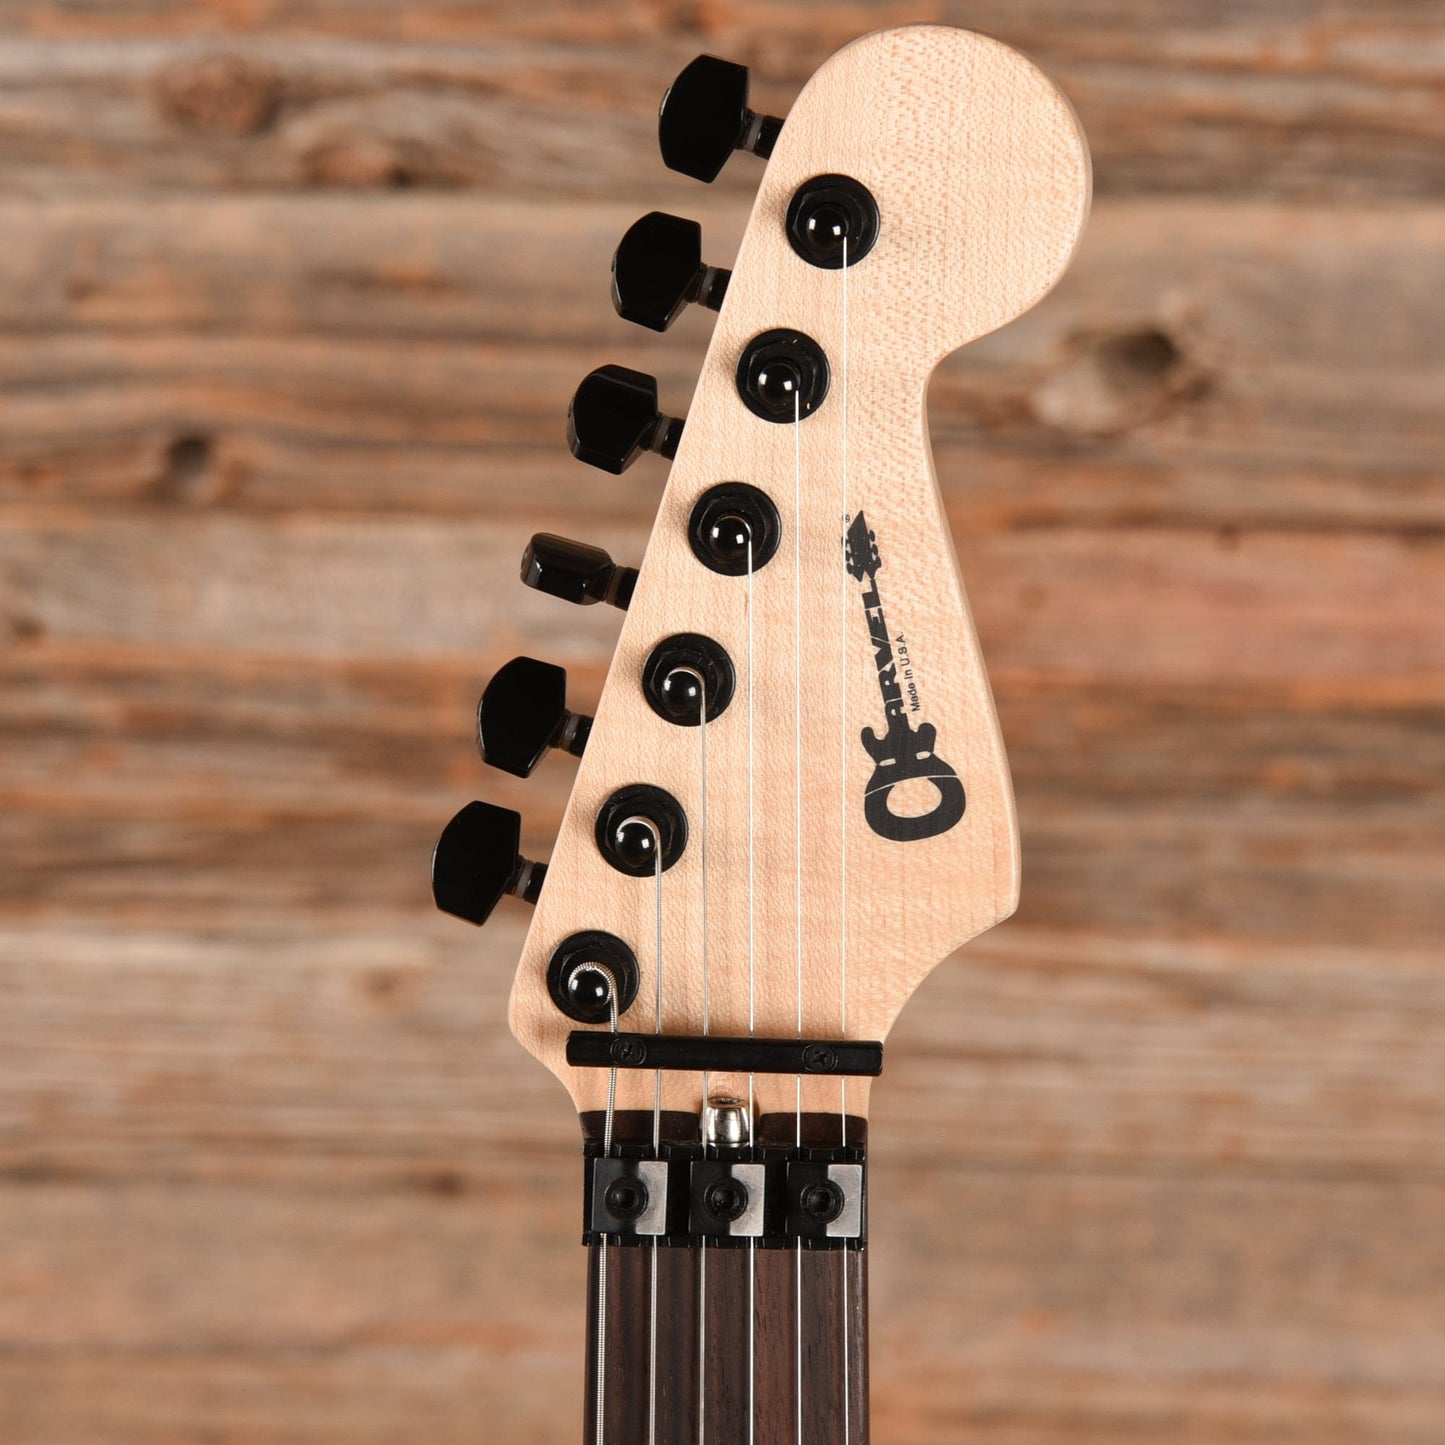 Charvel USA Select San Dimas Style 1 HSS FR White 2023 Electric Guitars / Solid Body